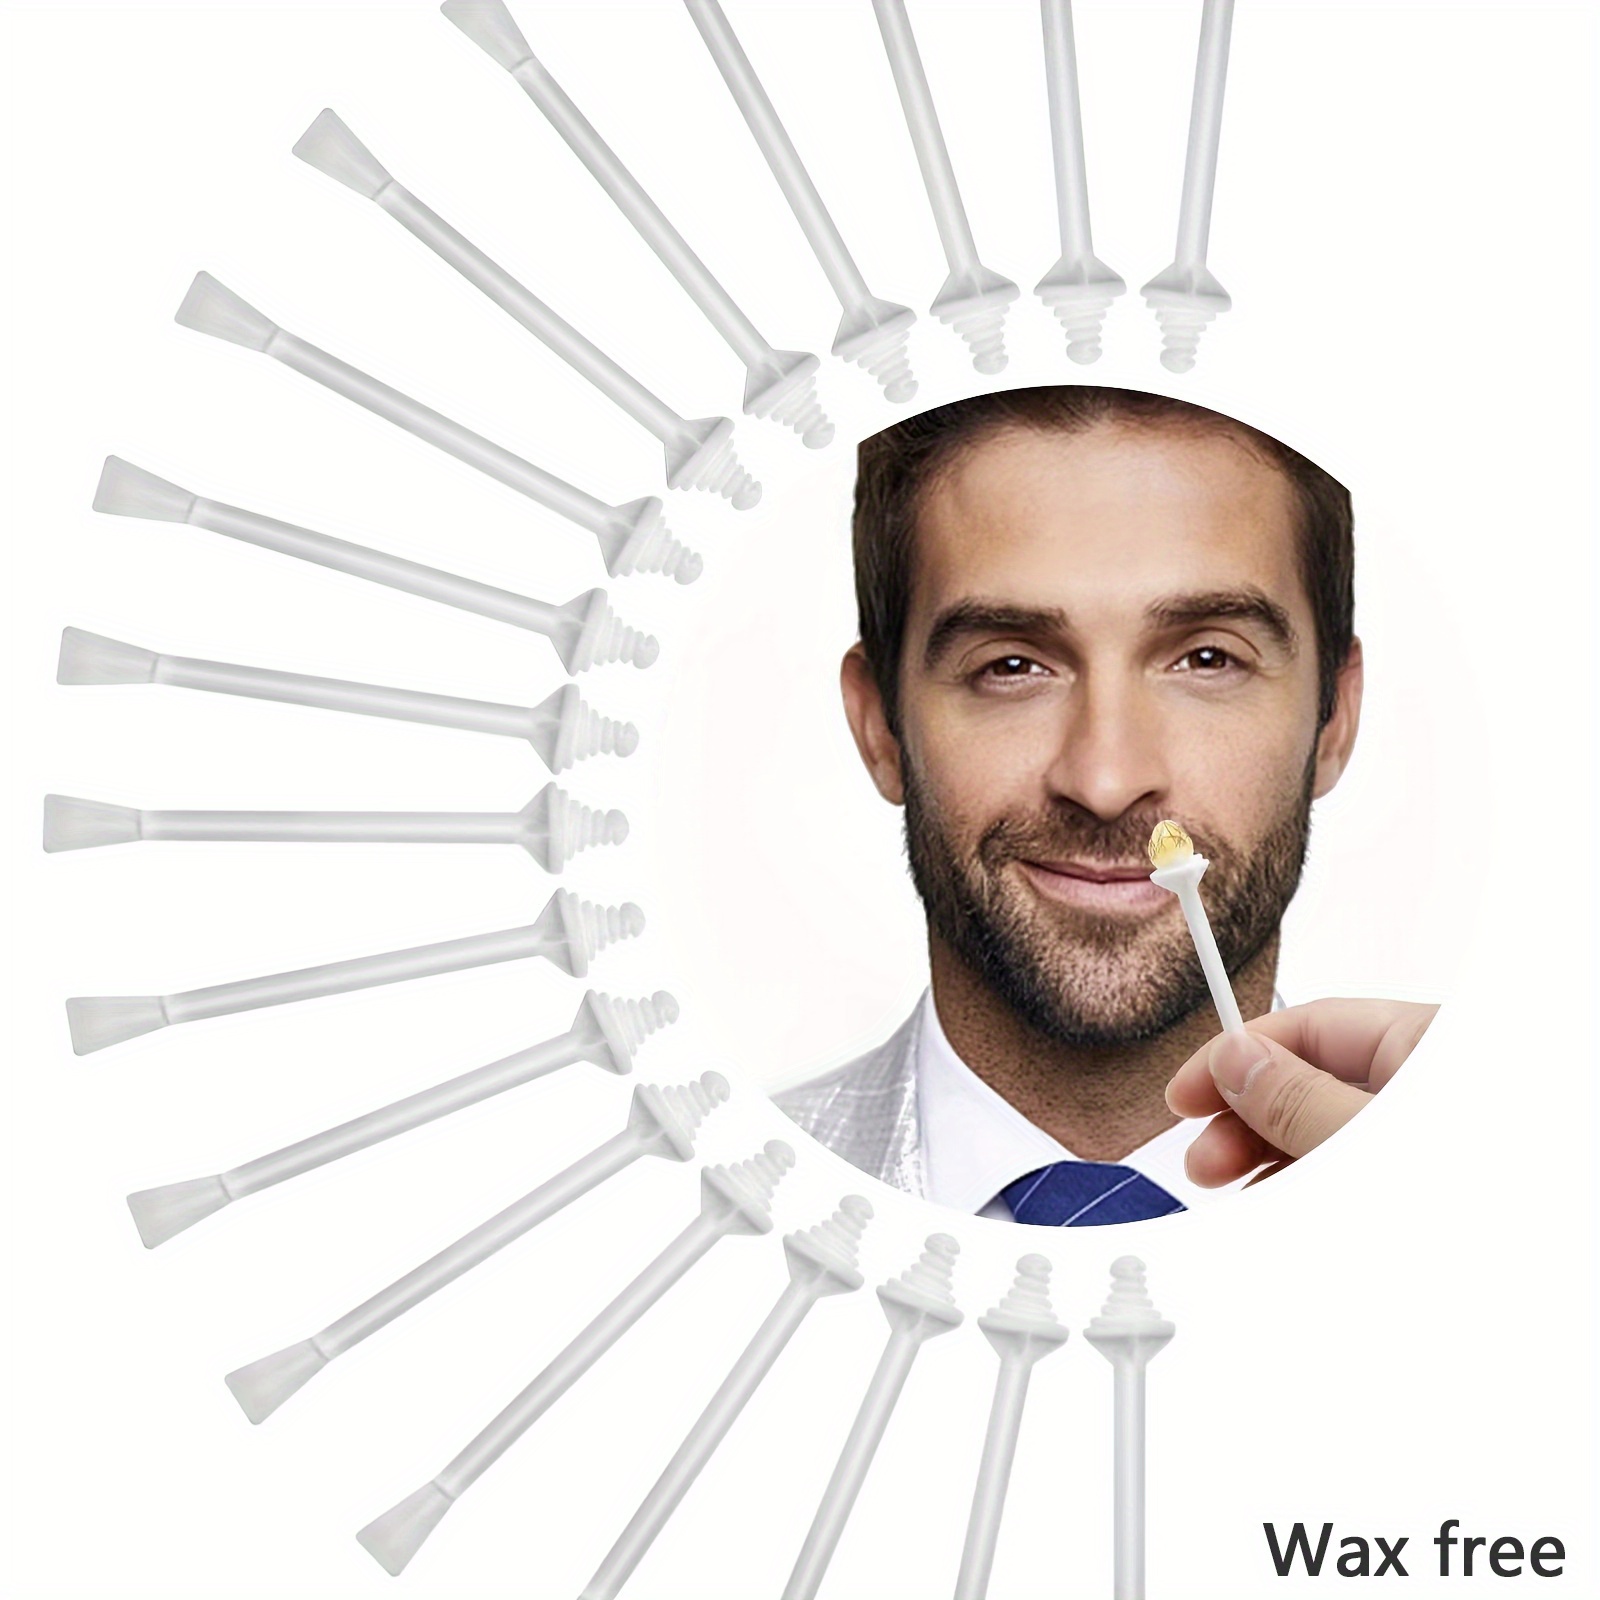 60X MULTI-PROPOSE NOSE Wax Stick Hair-Removal Nose Cleanin 7W3Q Applicators  Q3T3 $13.42 - PicClick AU